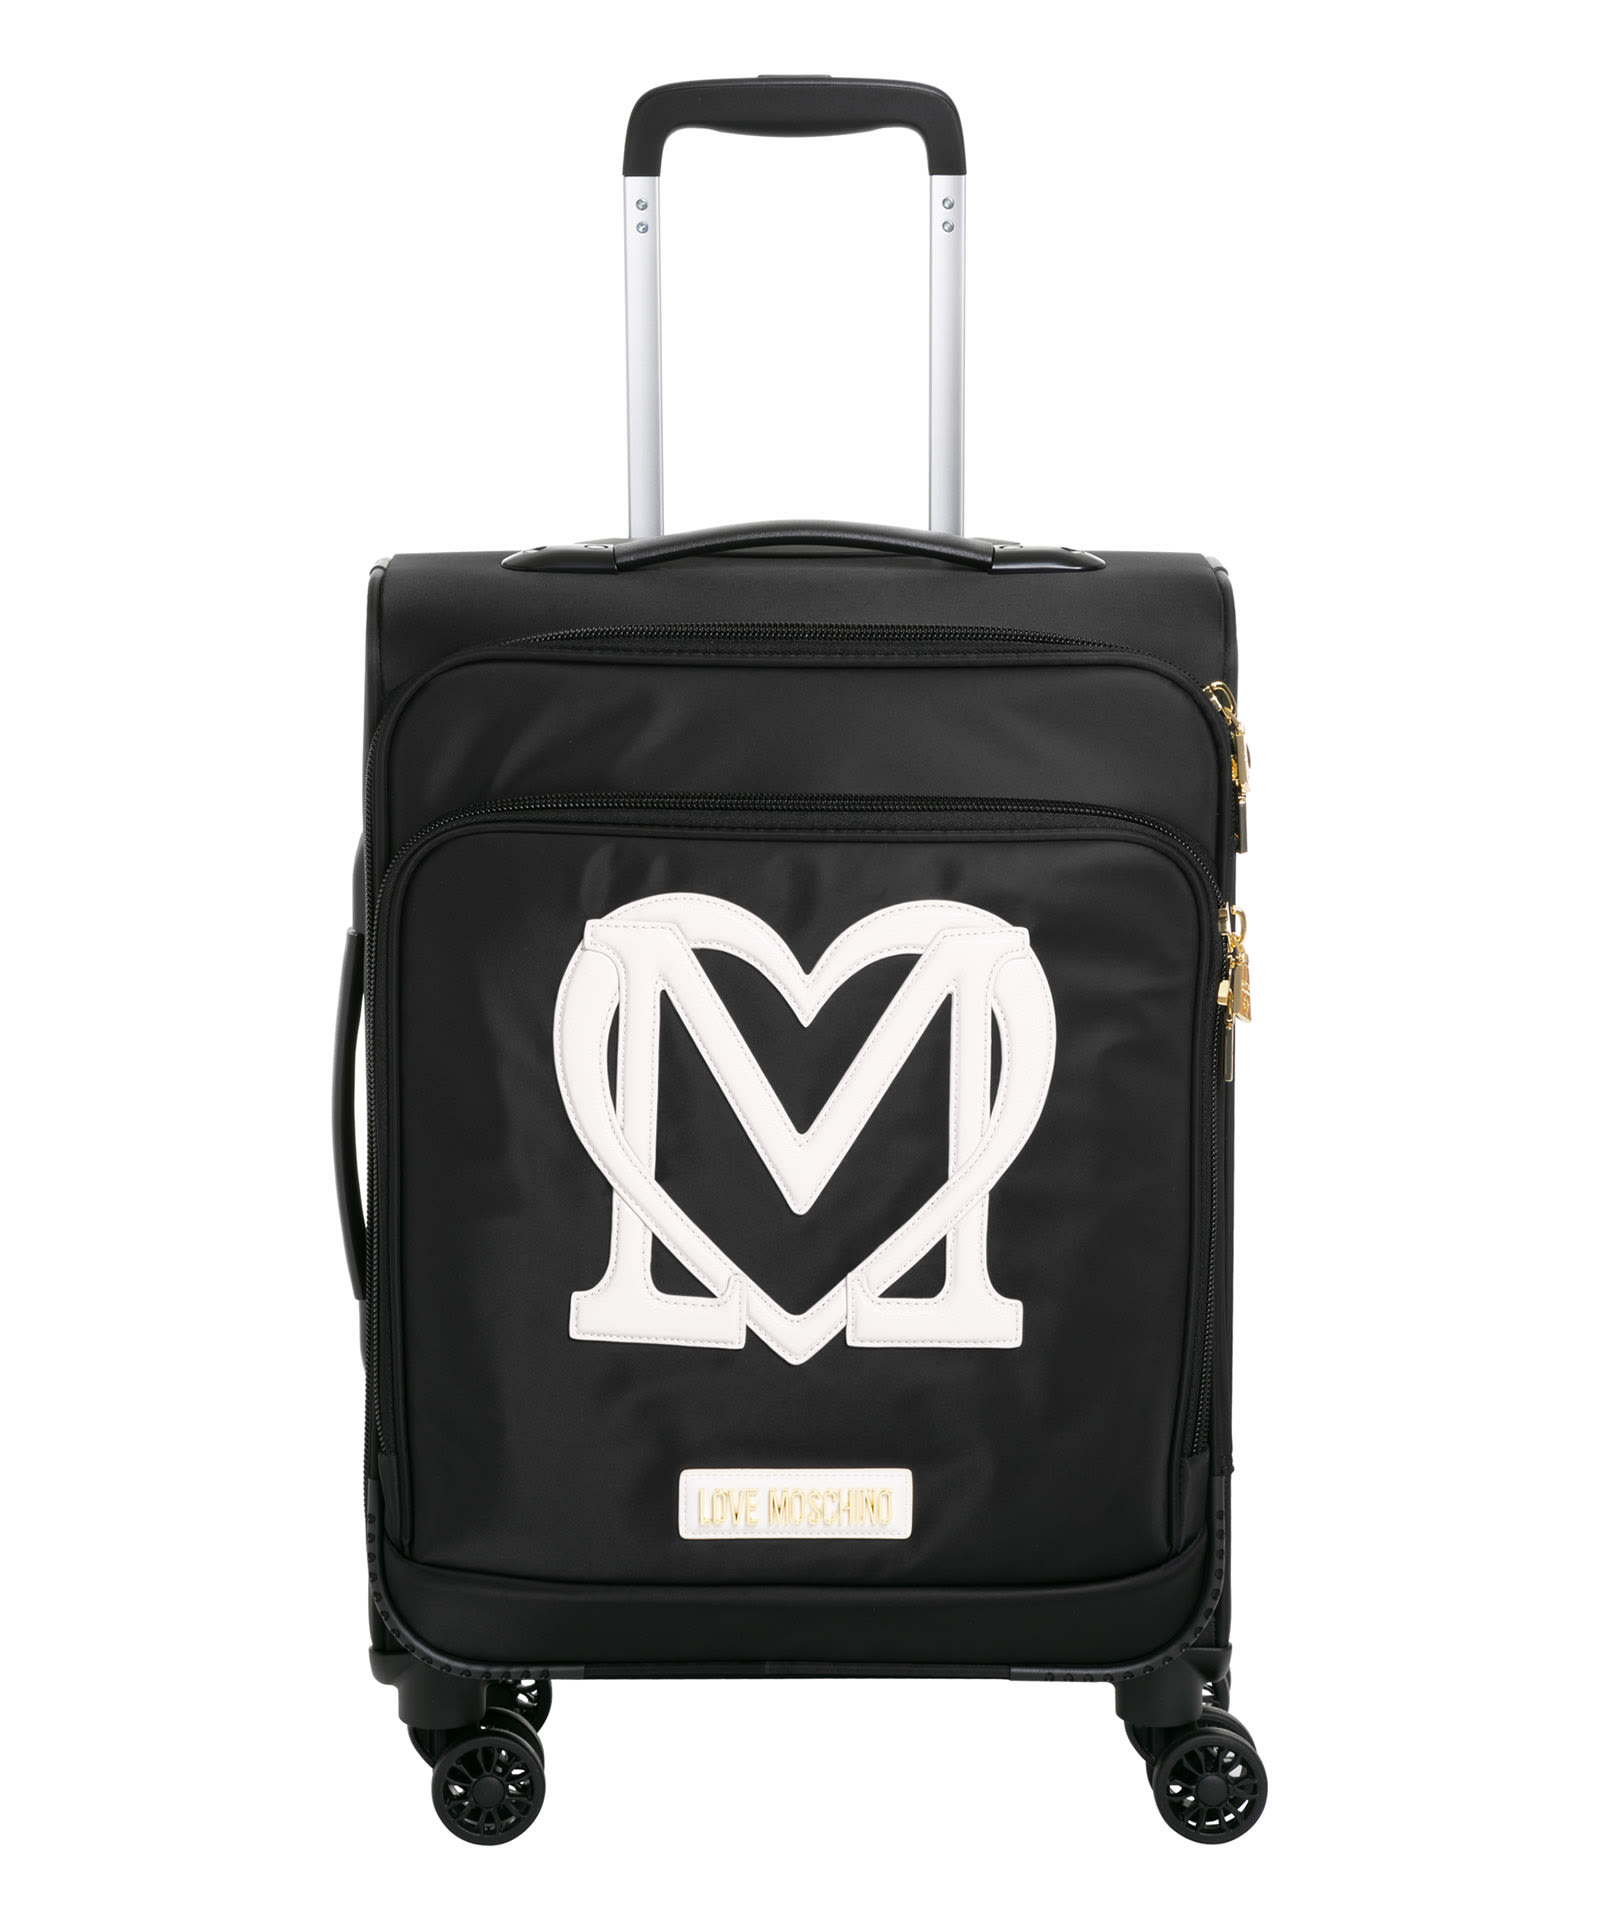 Love Moschino Suitcase